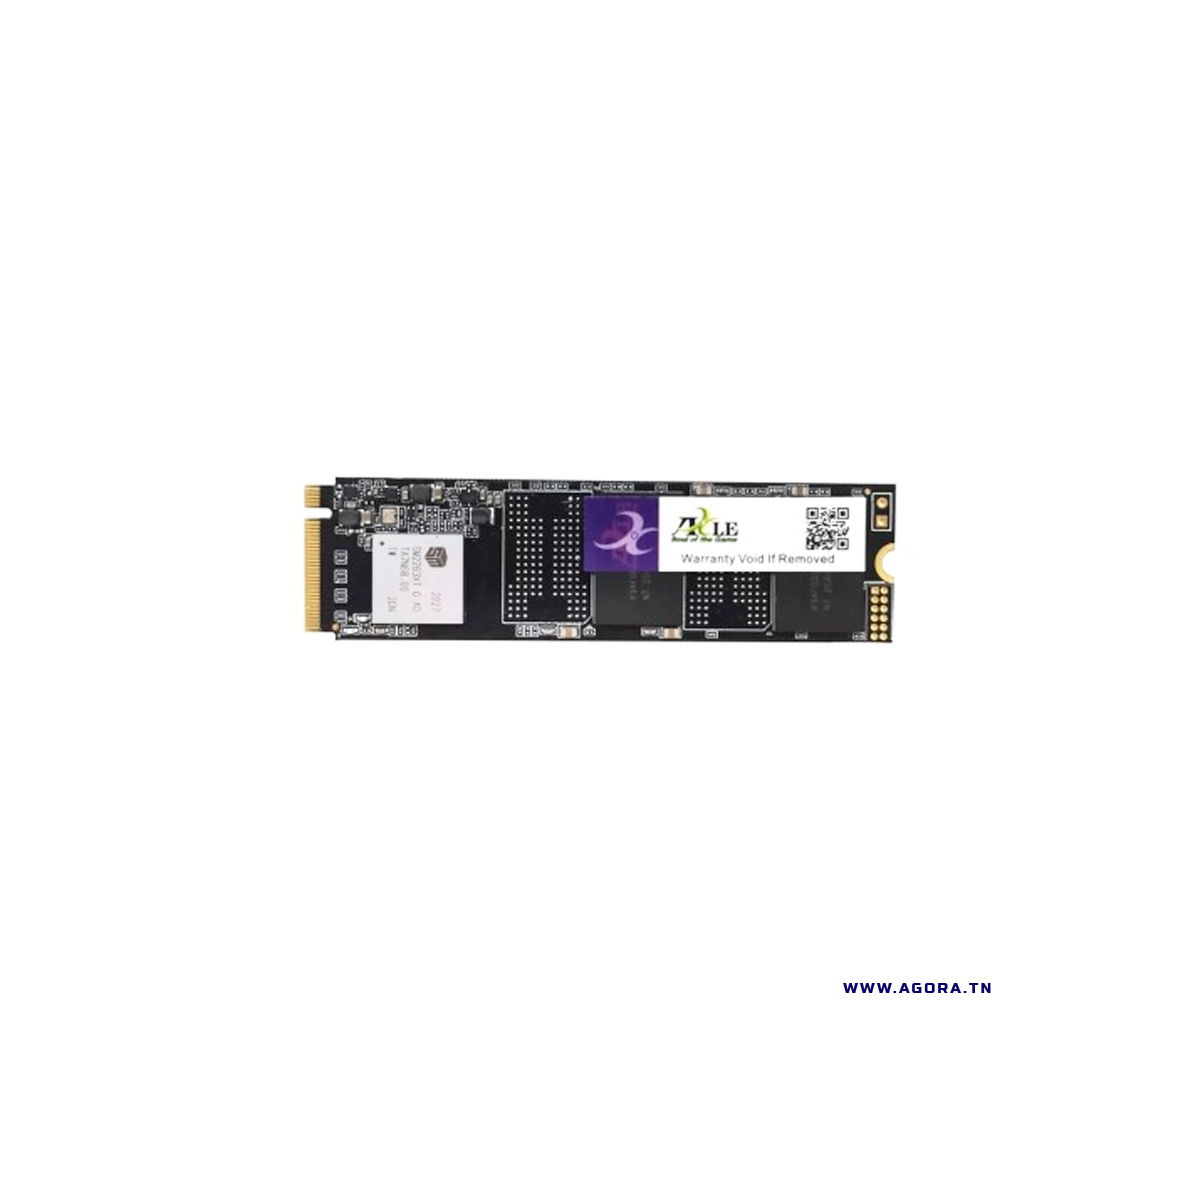 DISQUE DUR SSD AXLE 256GB PCIe M.2 2280 Gen3 x 4 | AGORA.TN